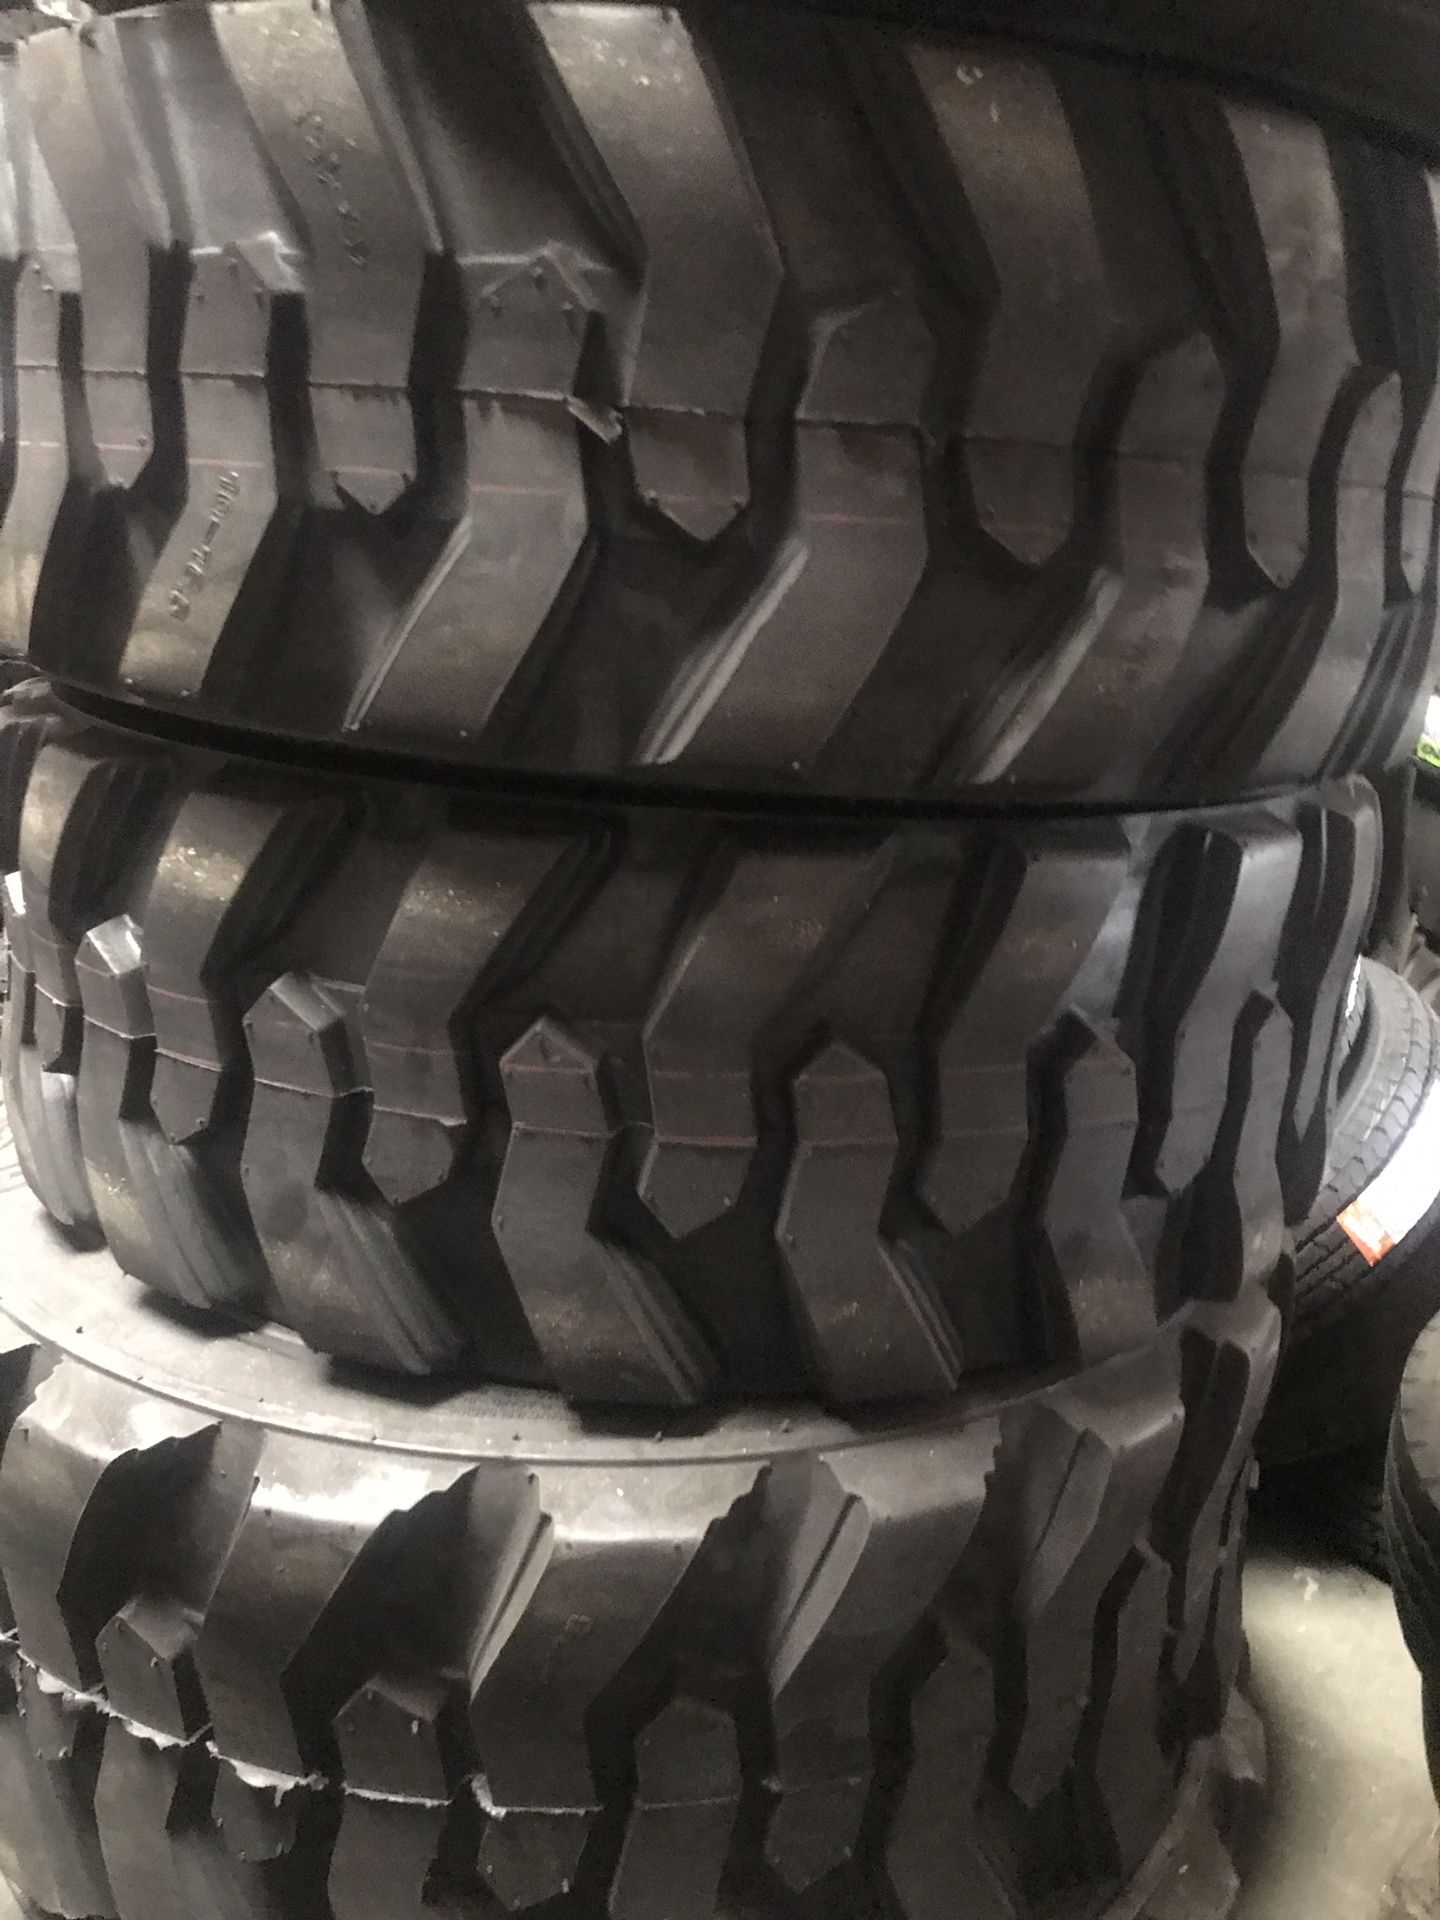 Bobcat tire on sale 4x 10-16.5 12 ply $ 430. 4x 12-16.5 14 ply $530